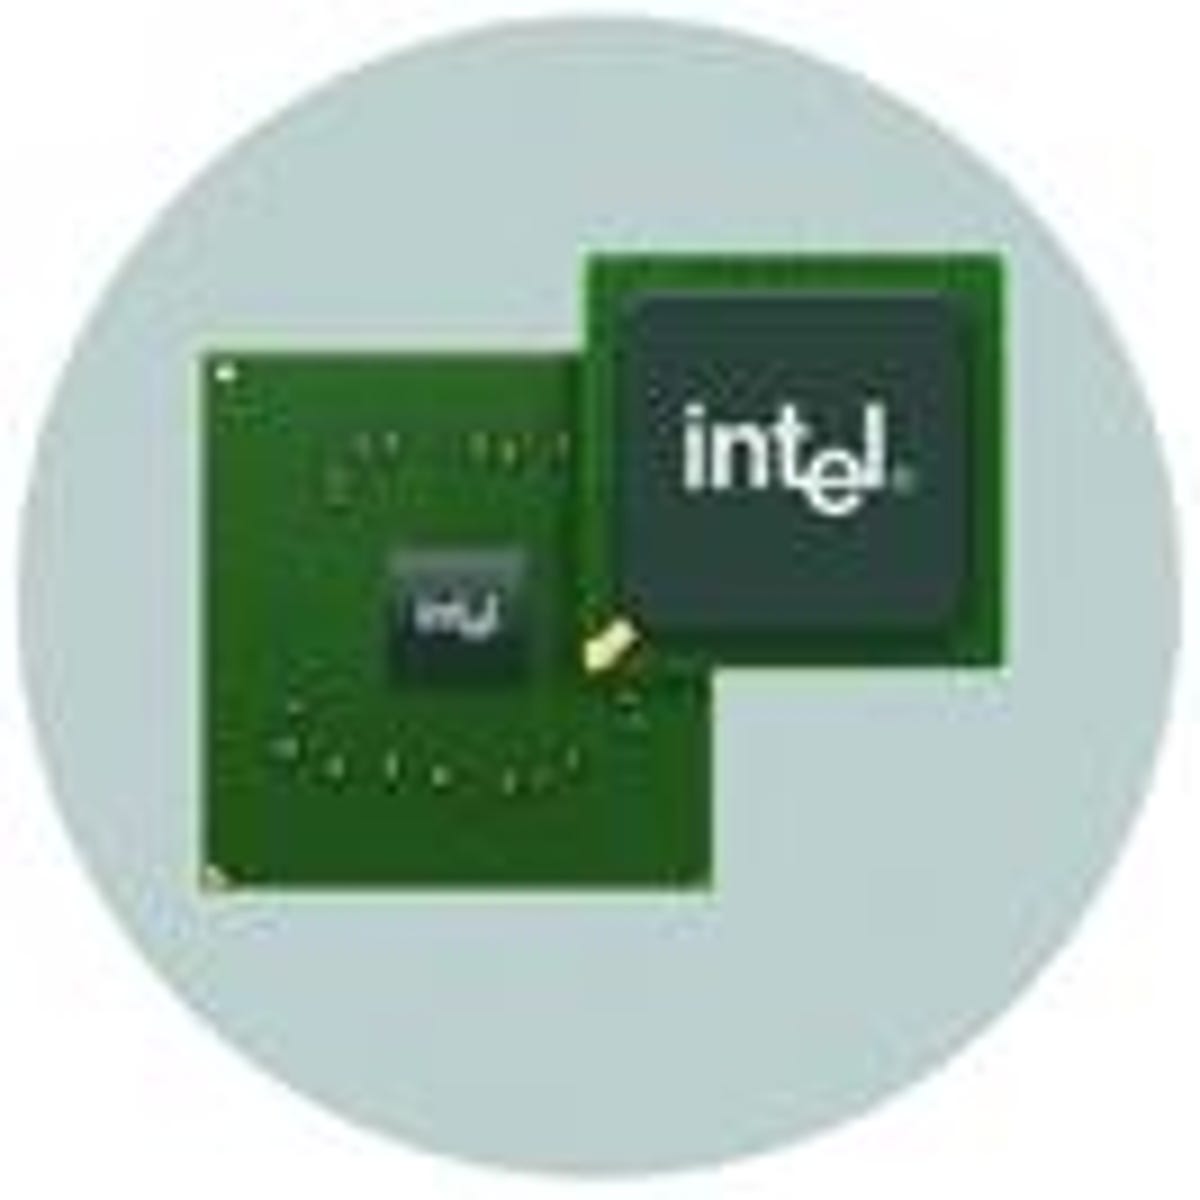 Intel 915 chipset